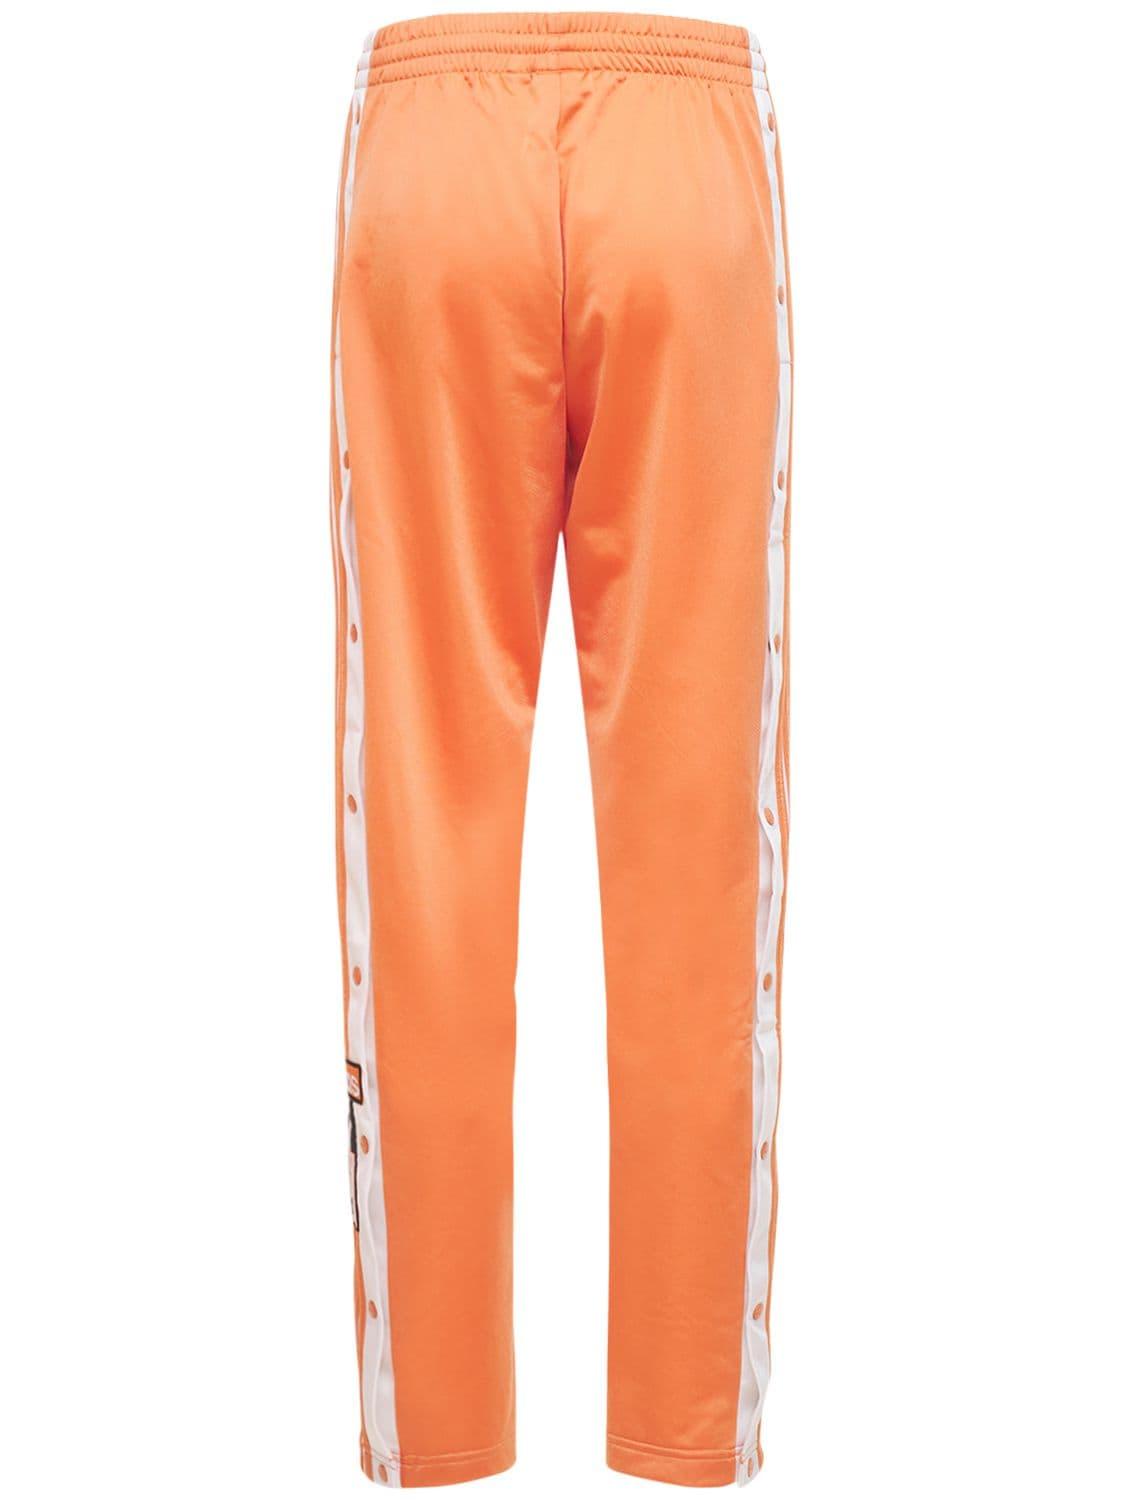 morder glimt Etna adidas Originals Adibreak Tp Pants in Orange | Lyst